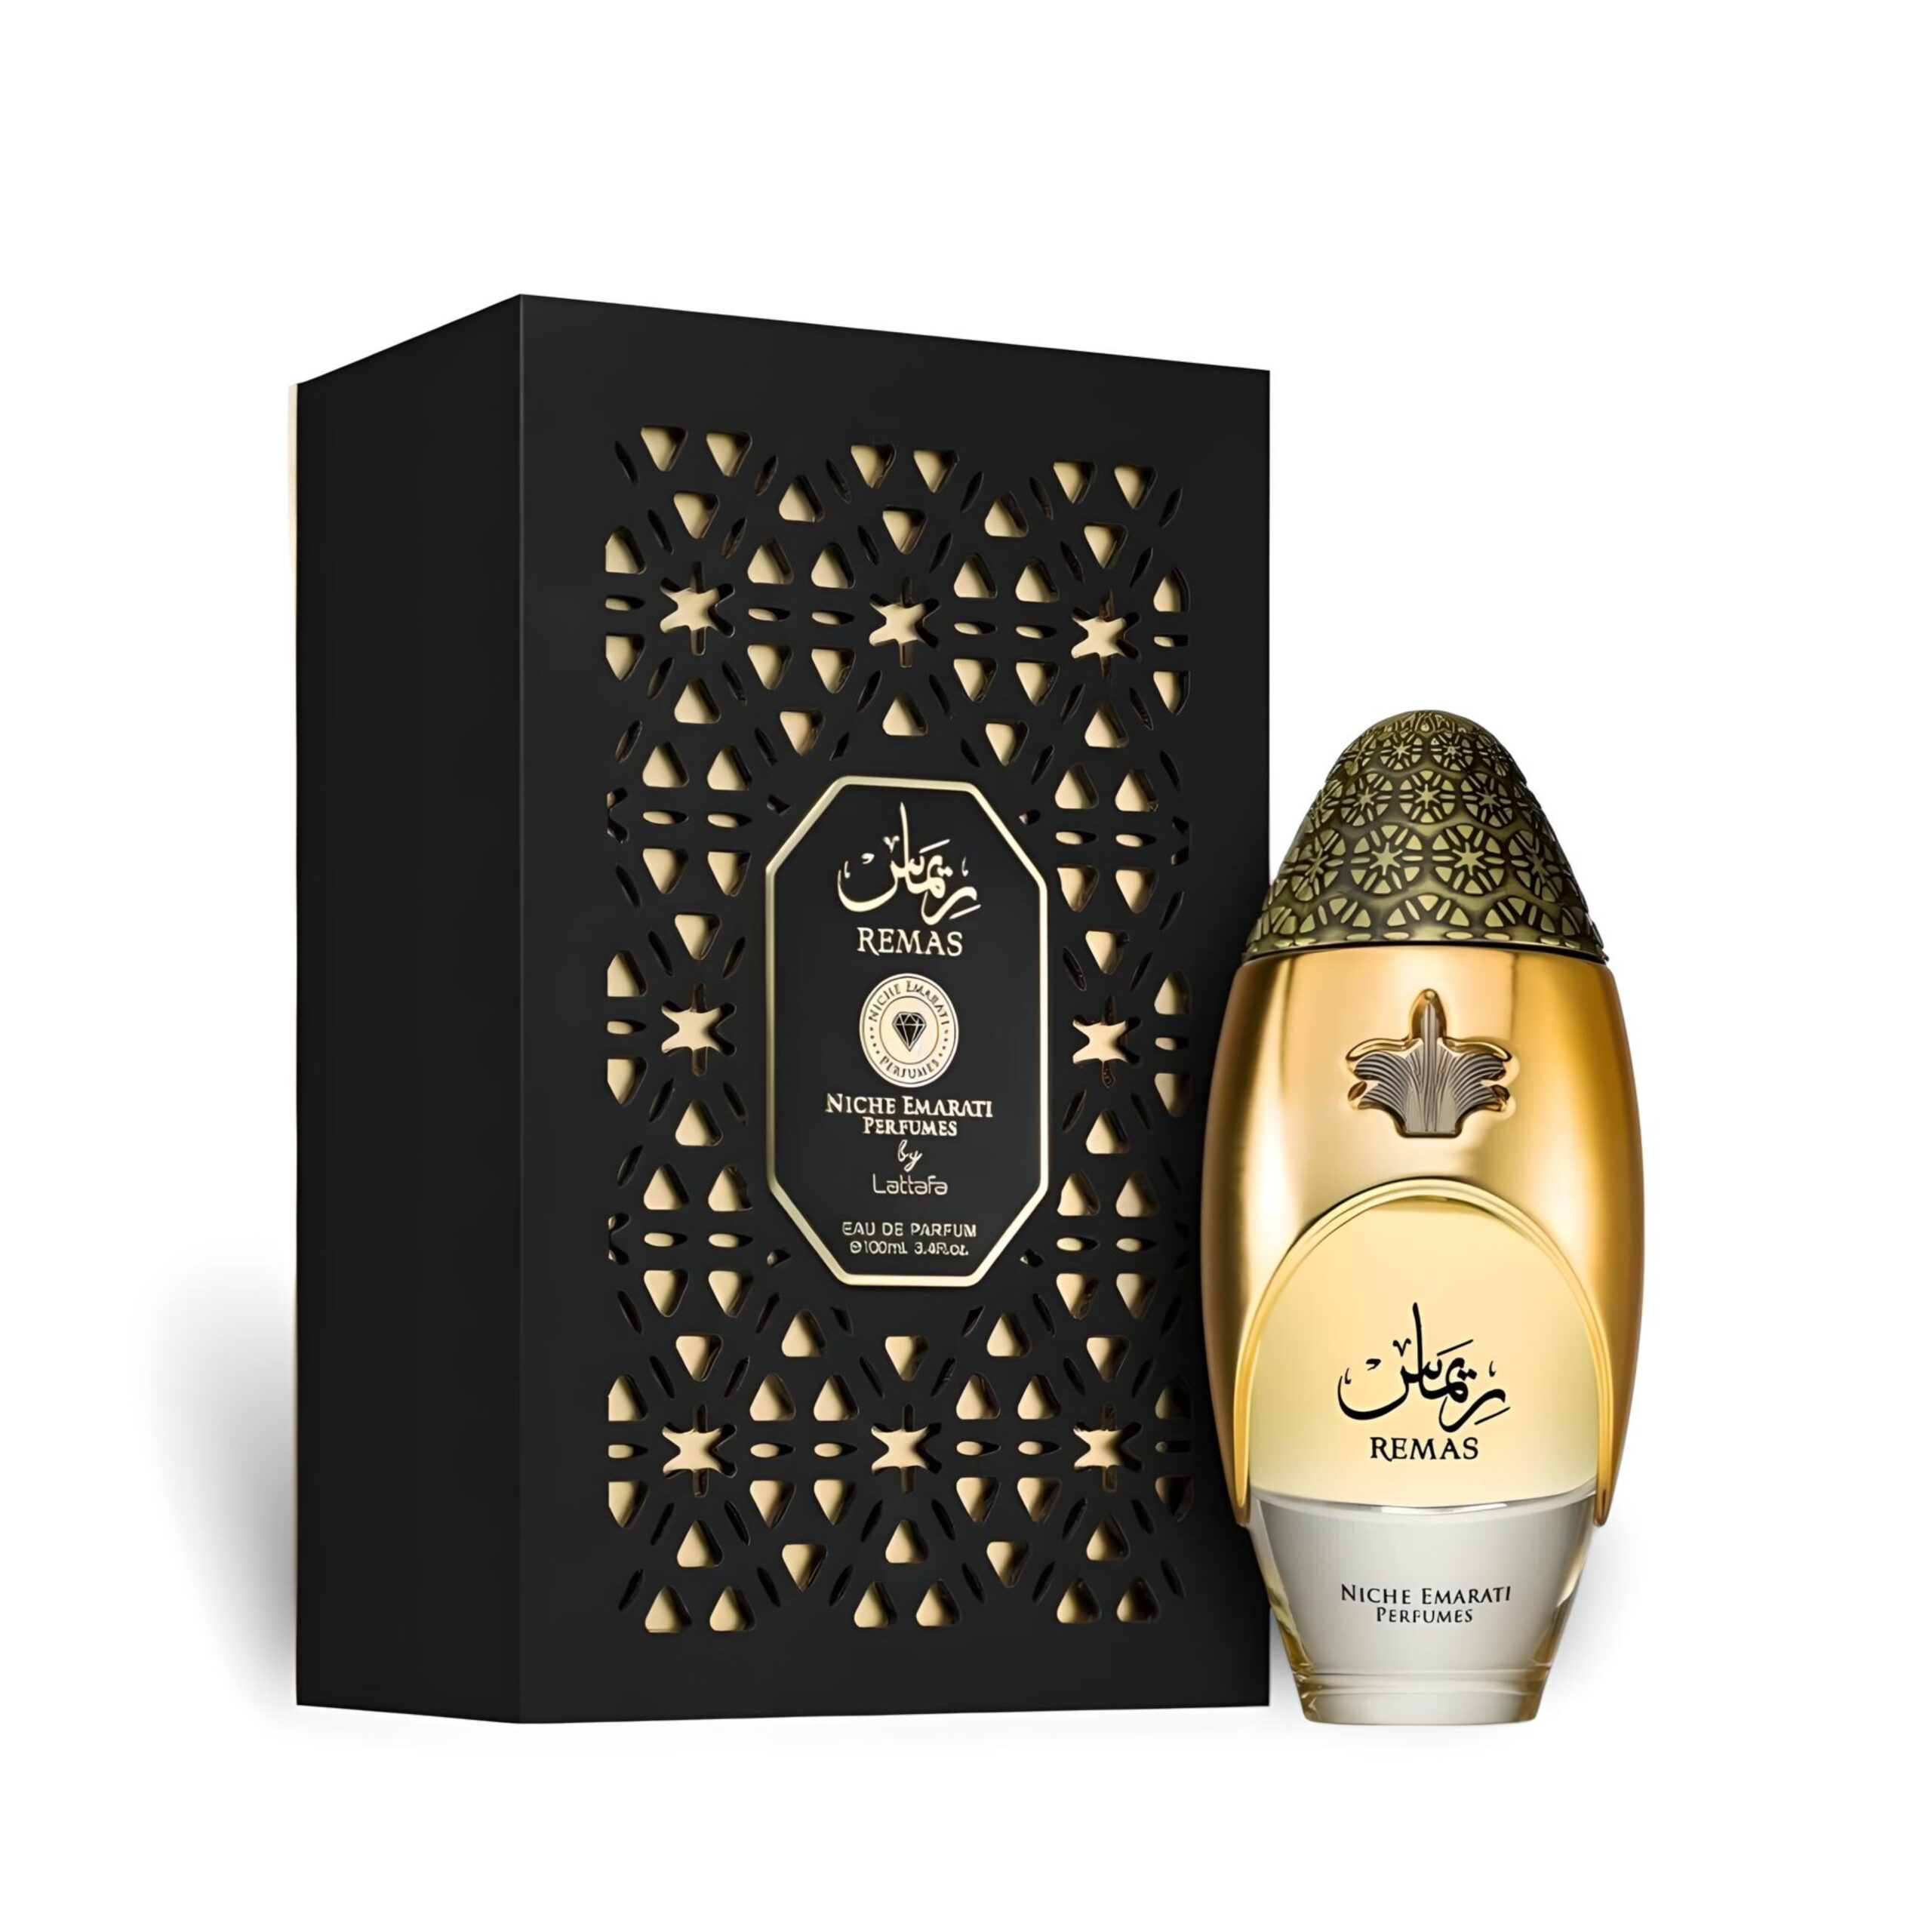 Remas Perfume Eau De Parfum 100Ml By Niche Emarati Perfumes (Lattafa)